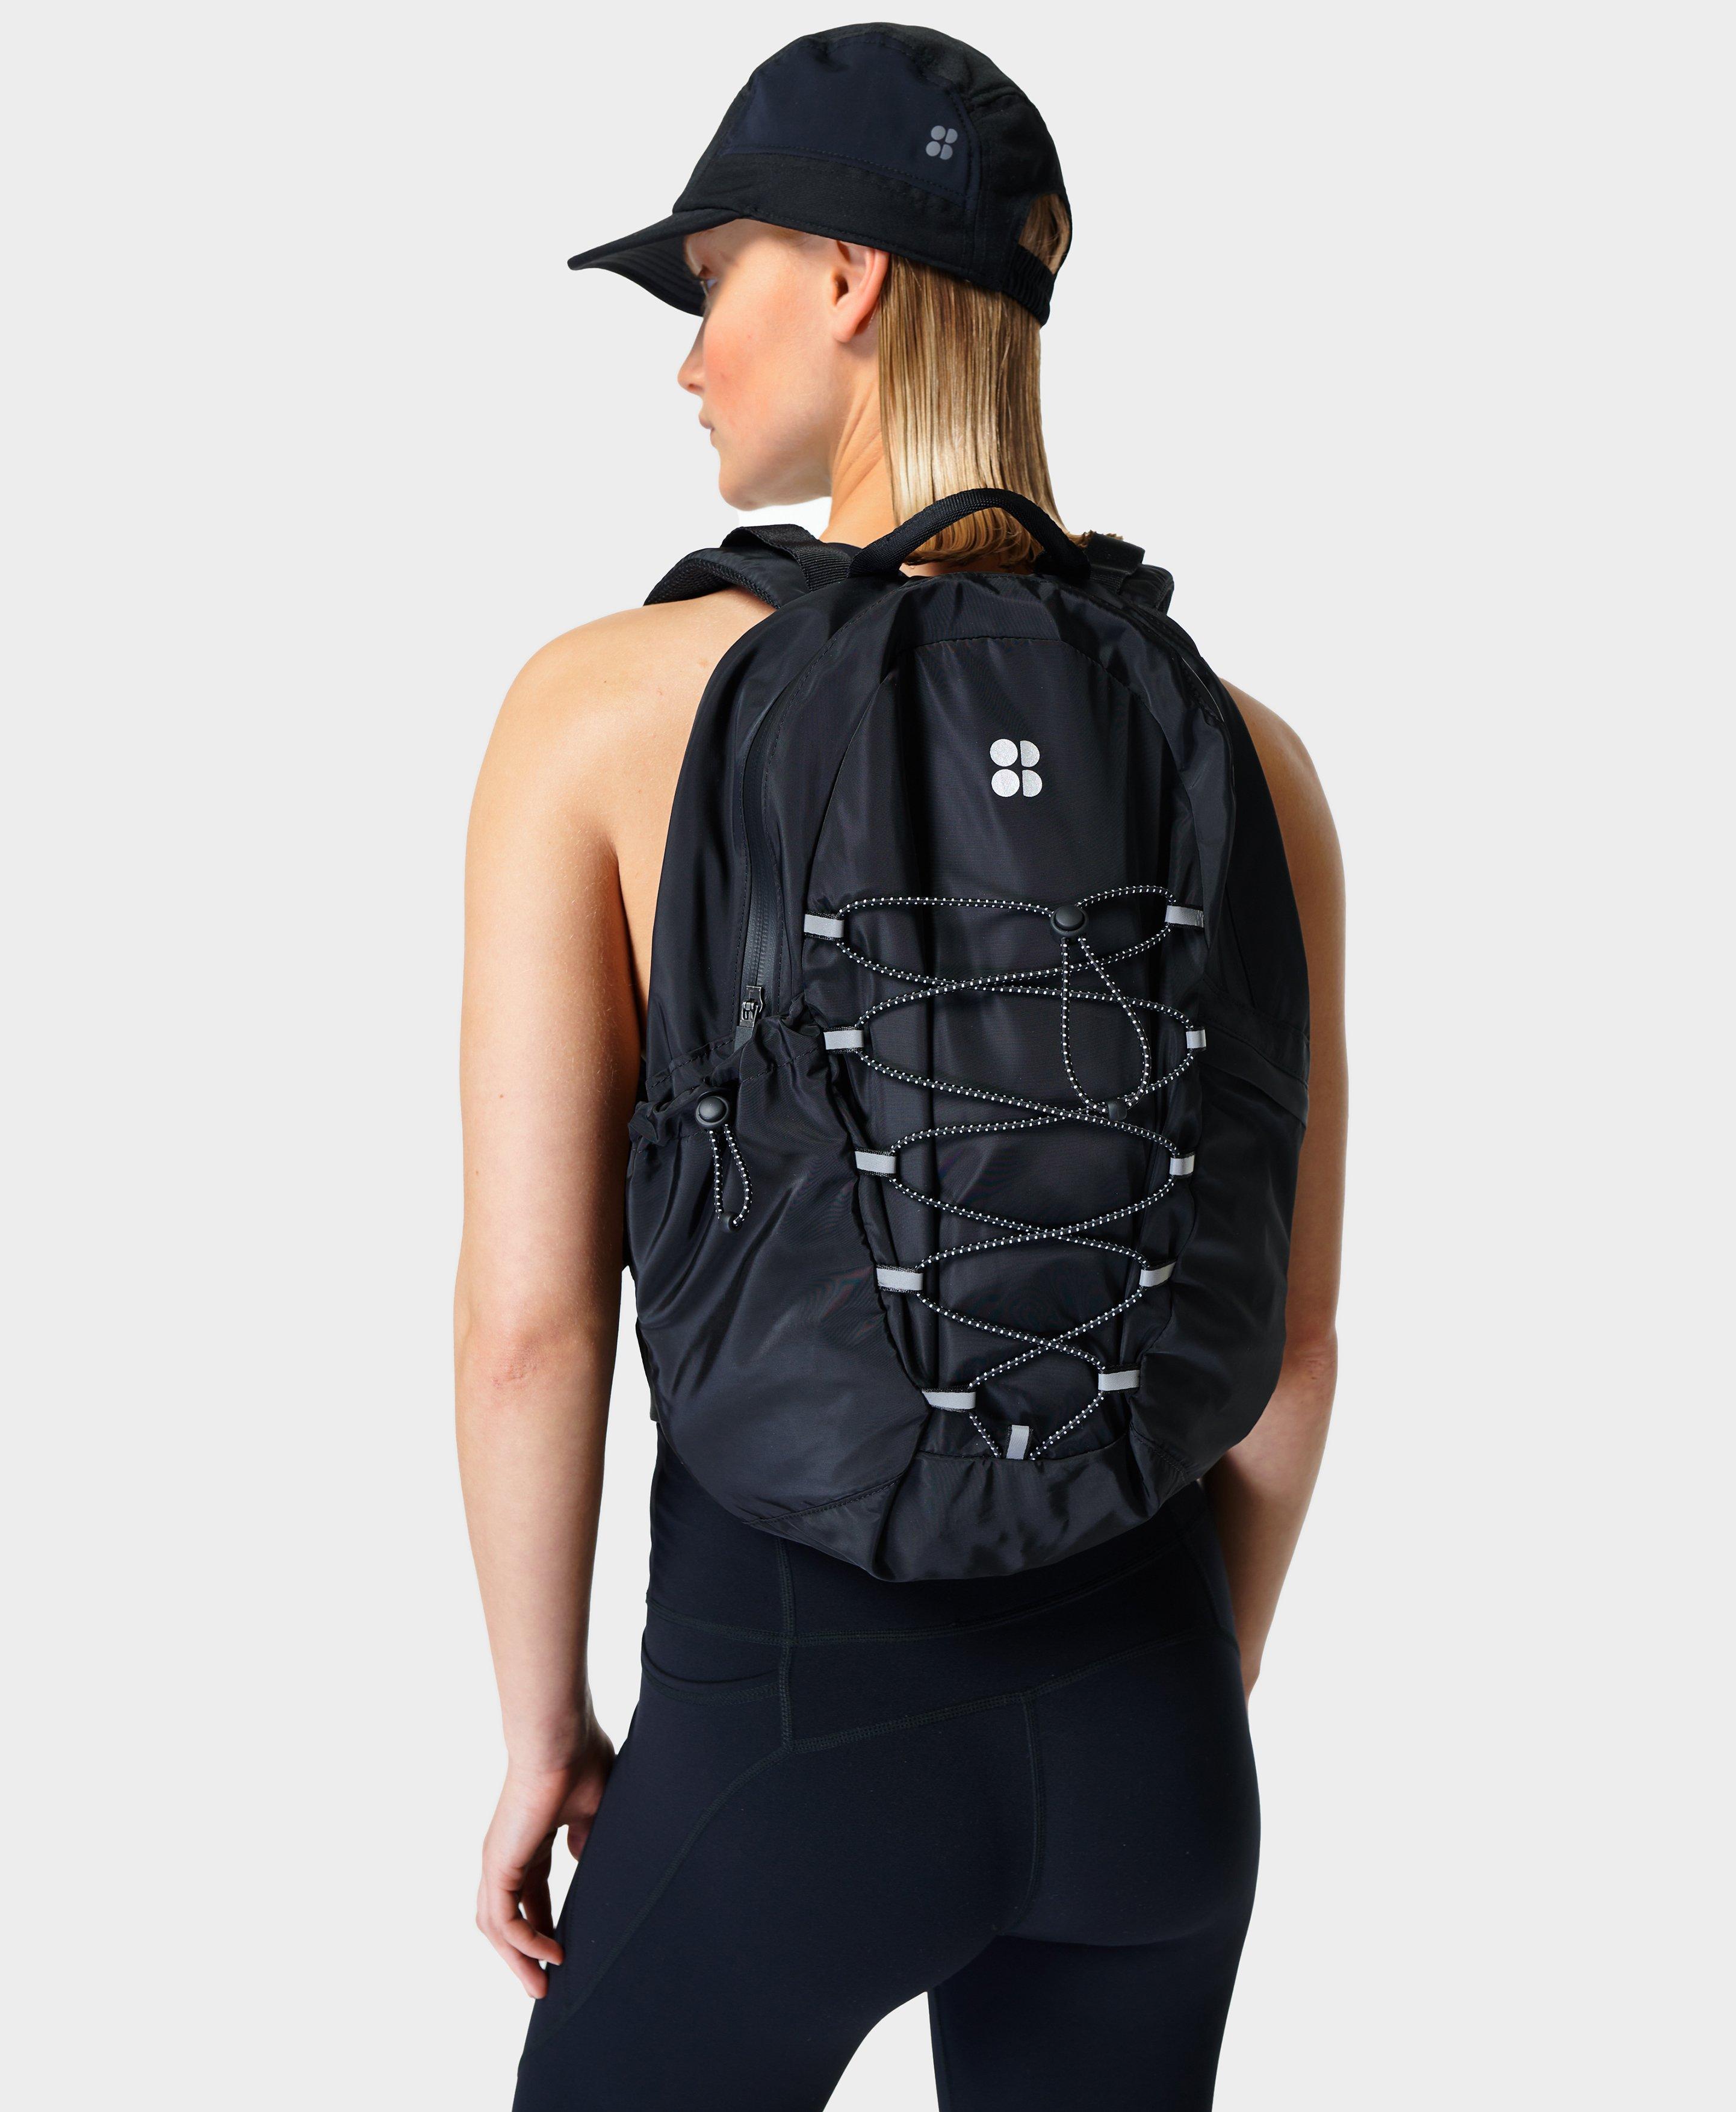 Sweaty Betty All Sport 2.0 Backpack - ShopStyle